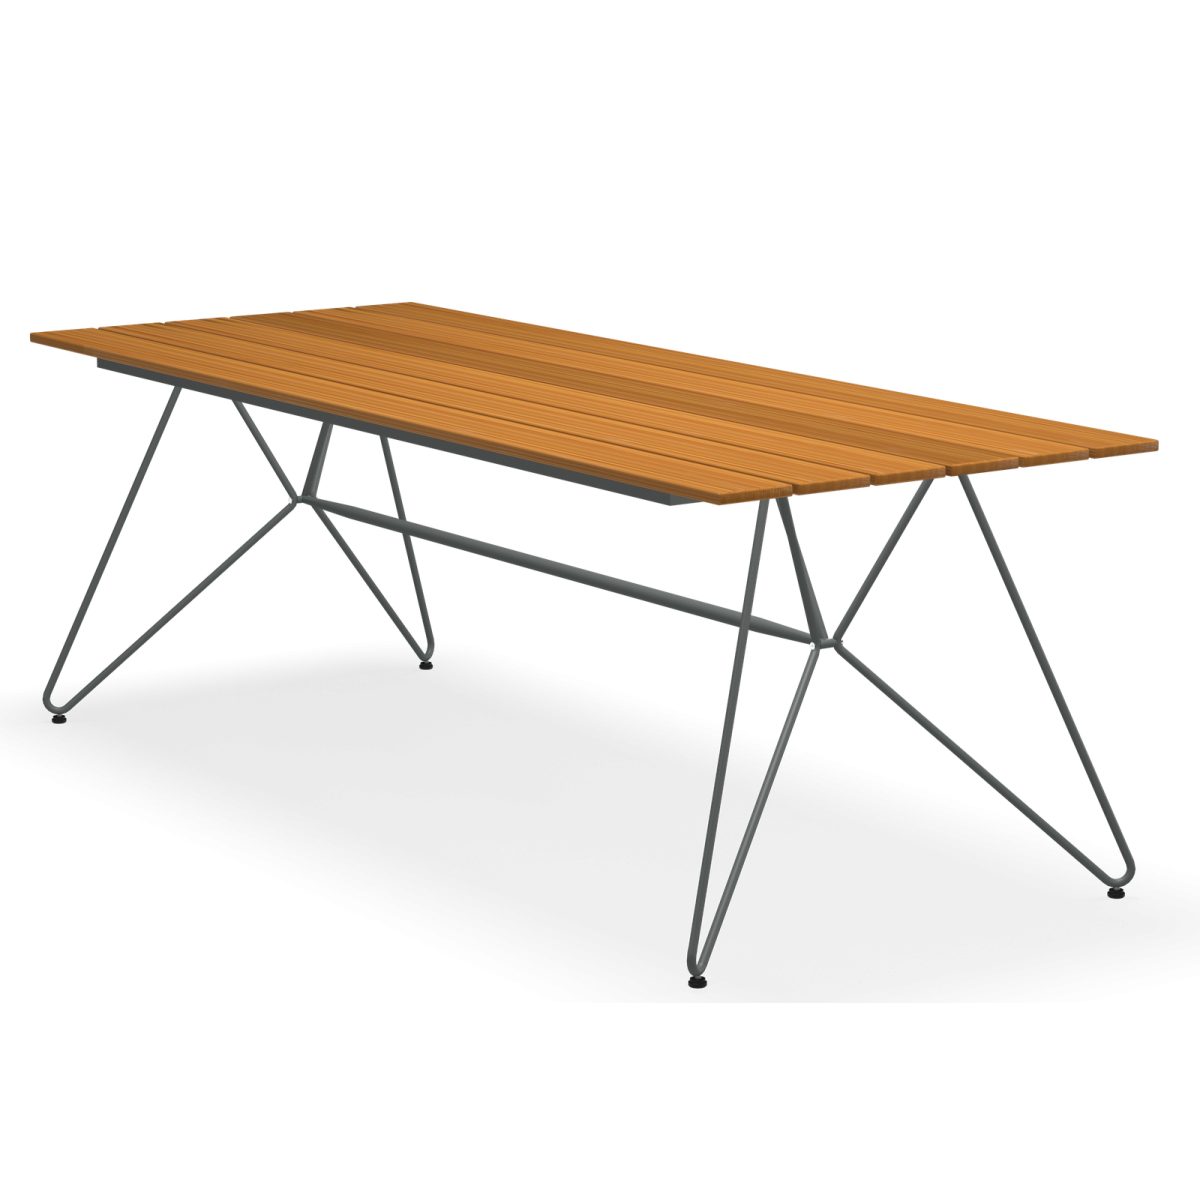 220x89cm - Sketch Table